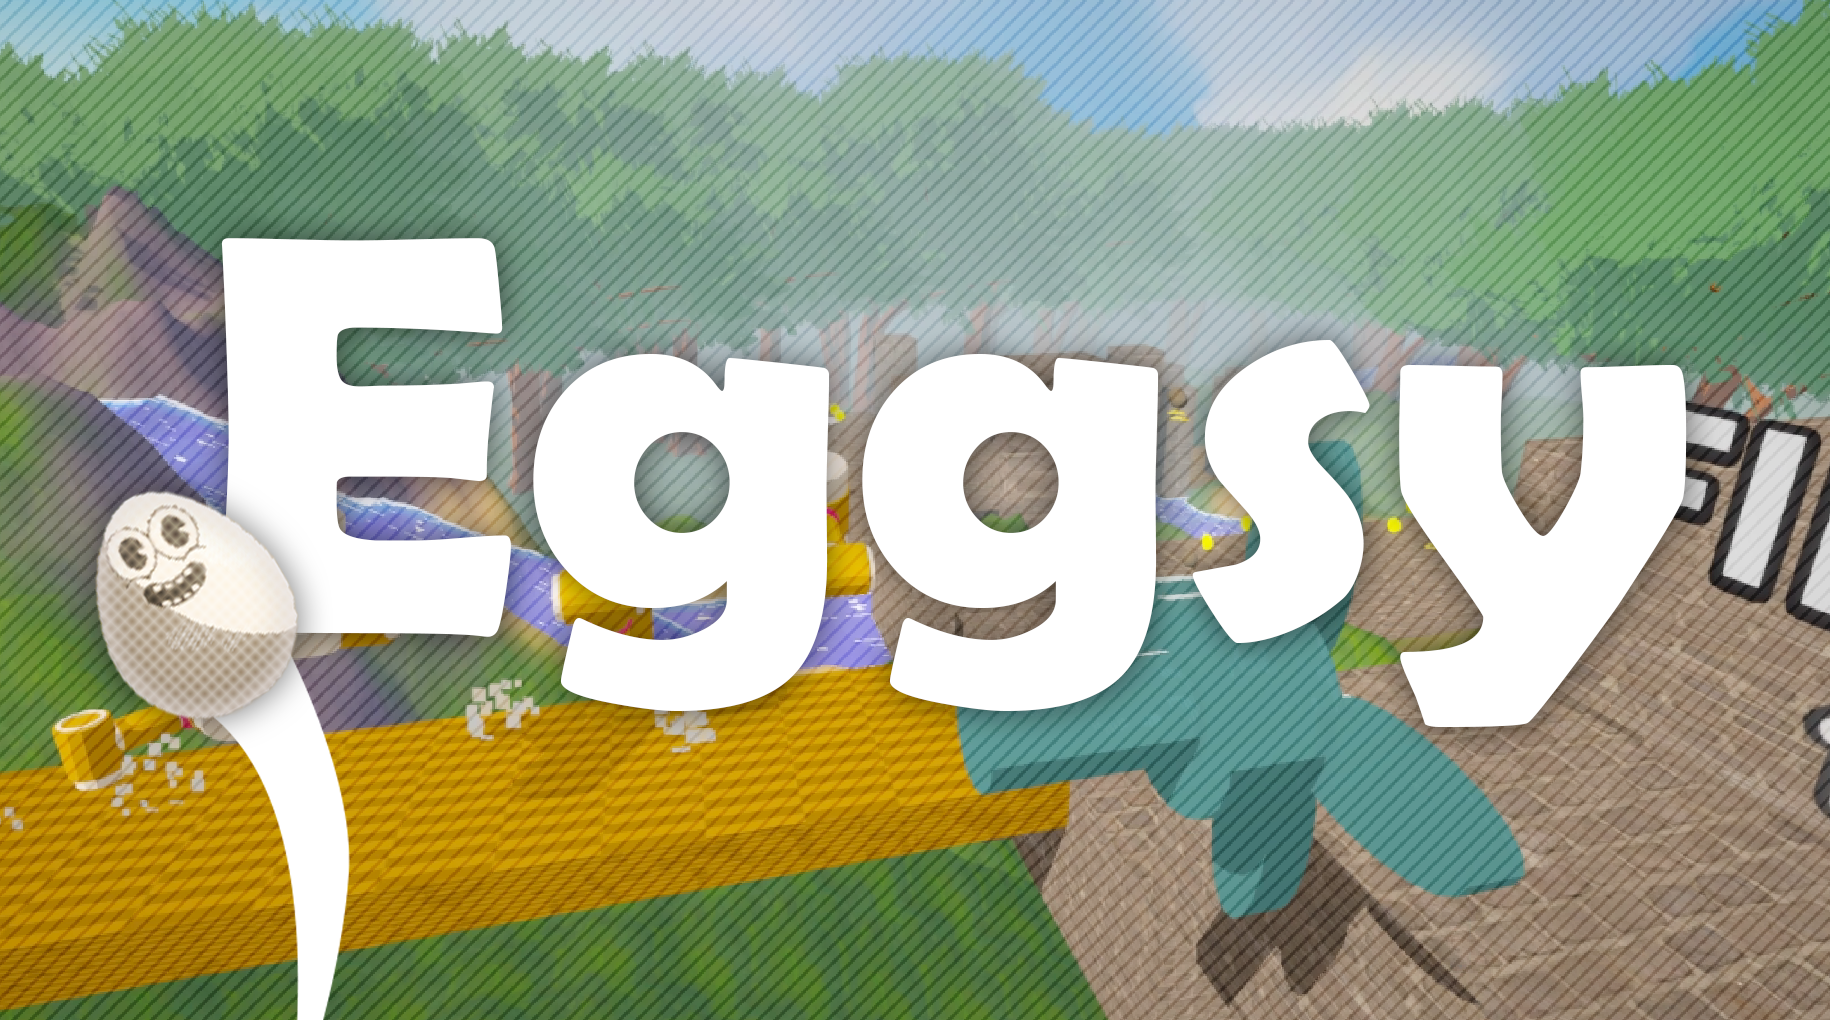 Eggsy